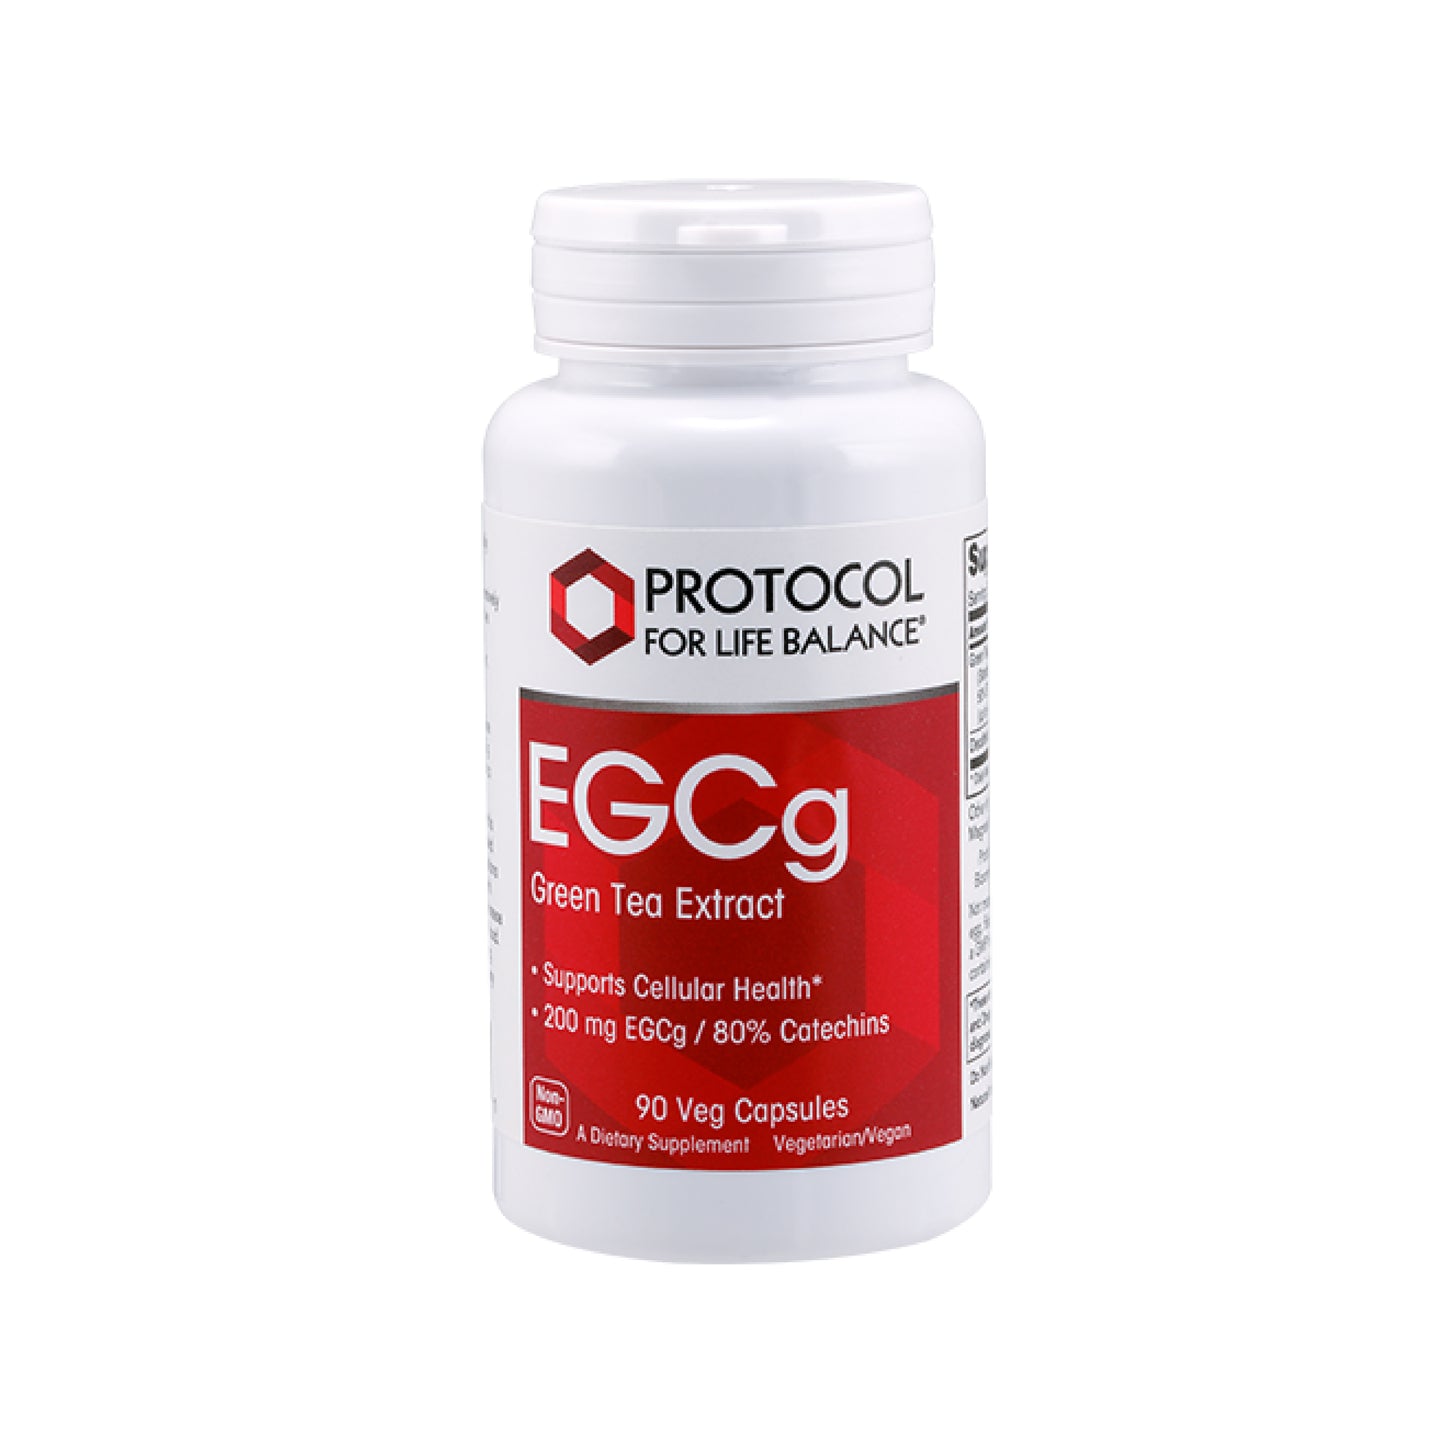 Protocol for Life Balance, EGCg Green Tea Extract, 200 mg, 90 Veg Capsules - Bloom Concept